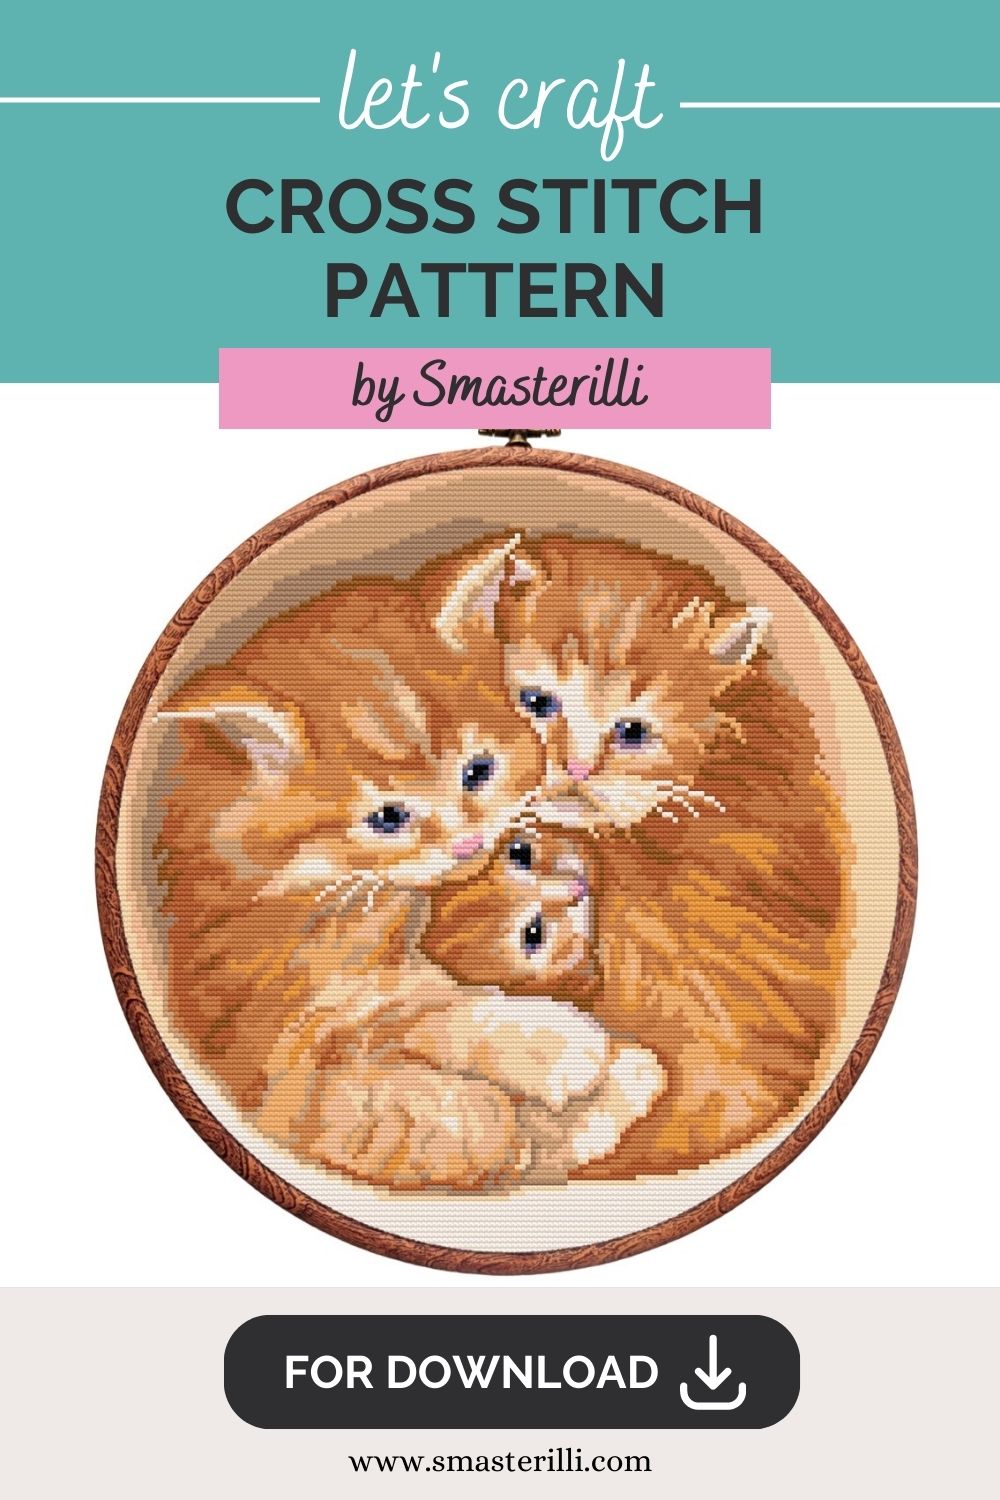 Orange baby kittens cross stitch patterns , cute tabby cats embroidery ornament by Smasterilli. Digital cross stitch pattern for instant download. #smasterilli #crossstitch #crossstitchpattern #catcrossstitch #orangecat #catinbasket